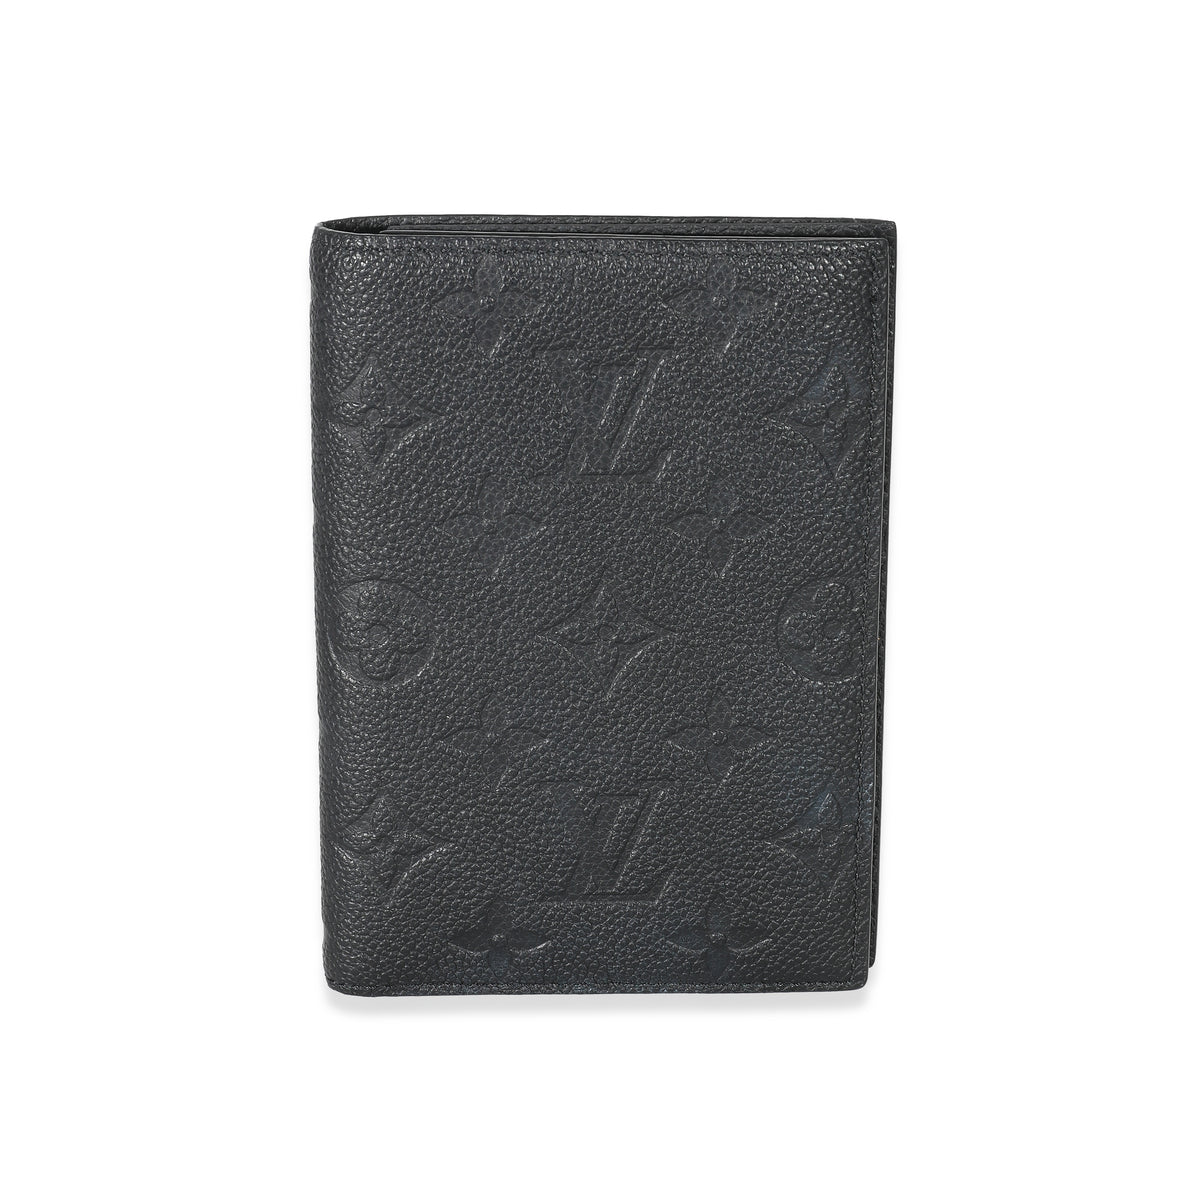 Louis Vuitton Passport Cover Monogram